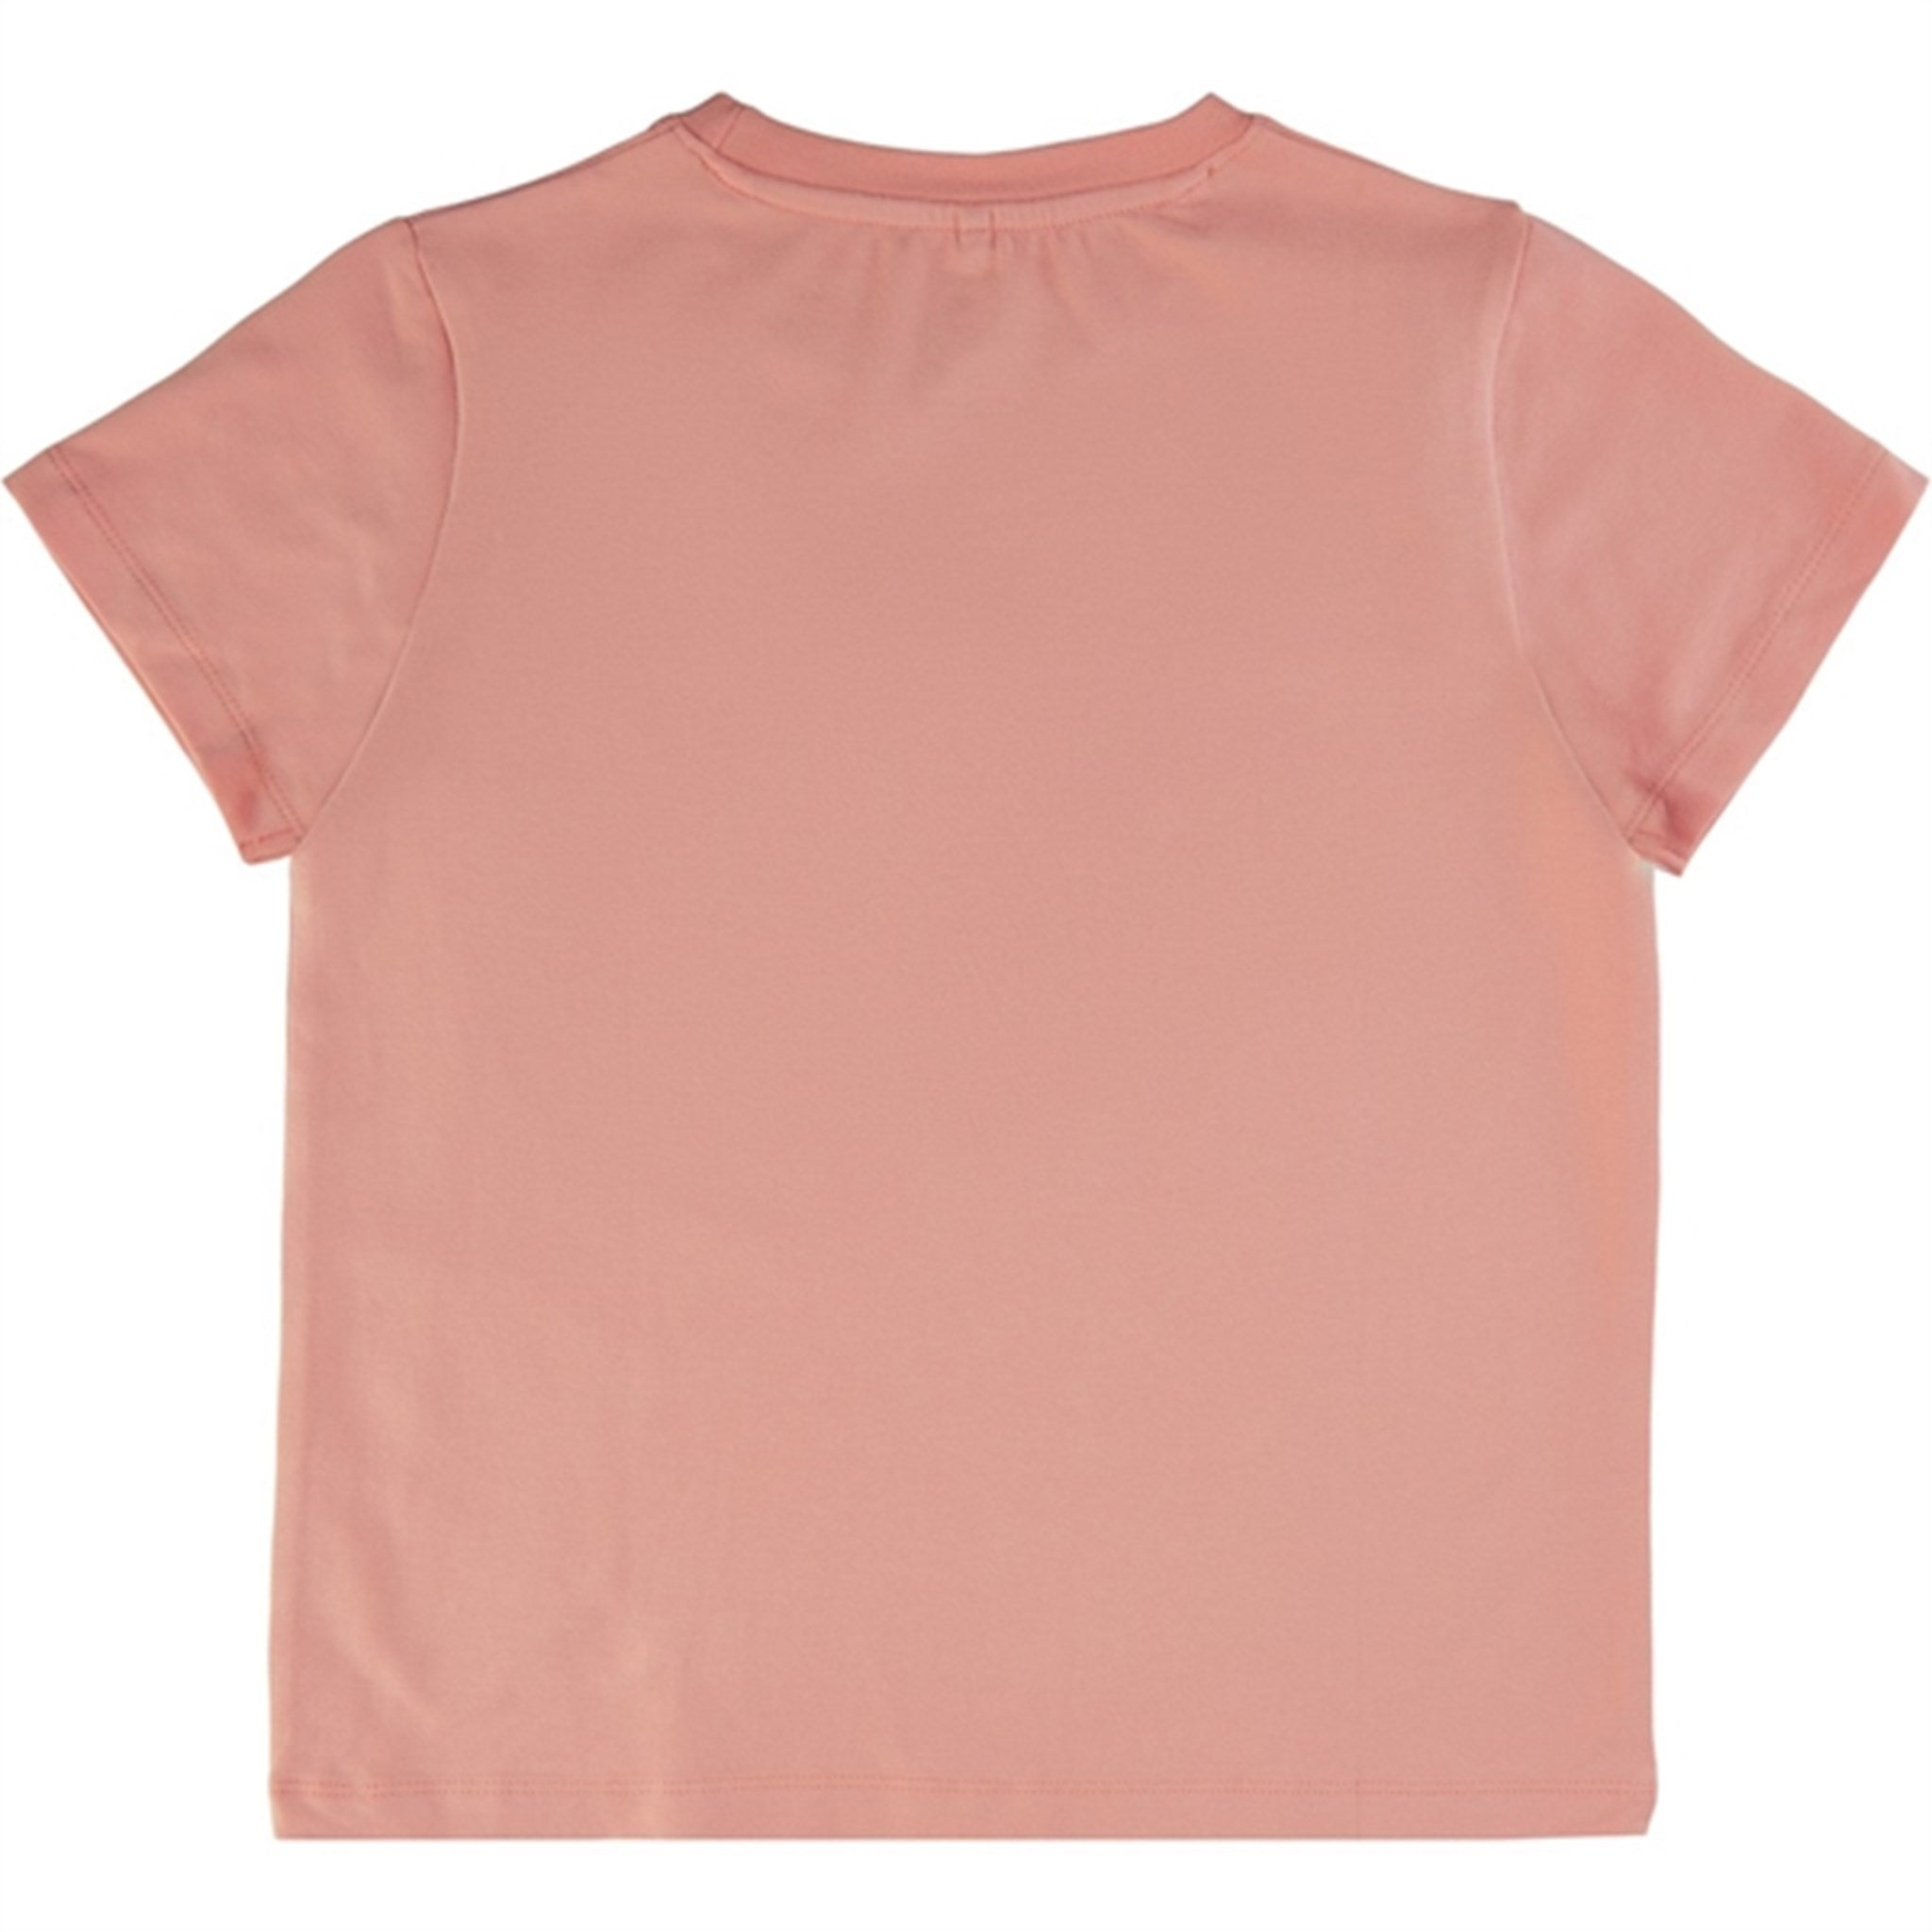 THE NEW Peach Beige Gala T-shirt 5